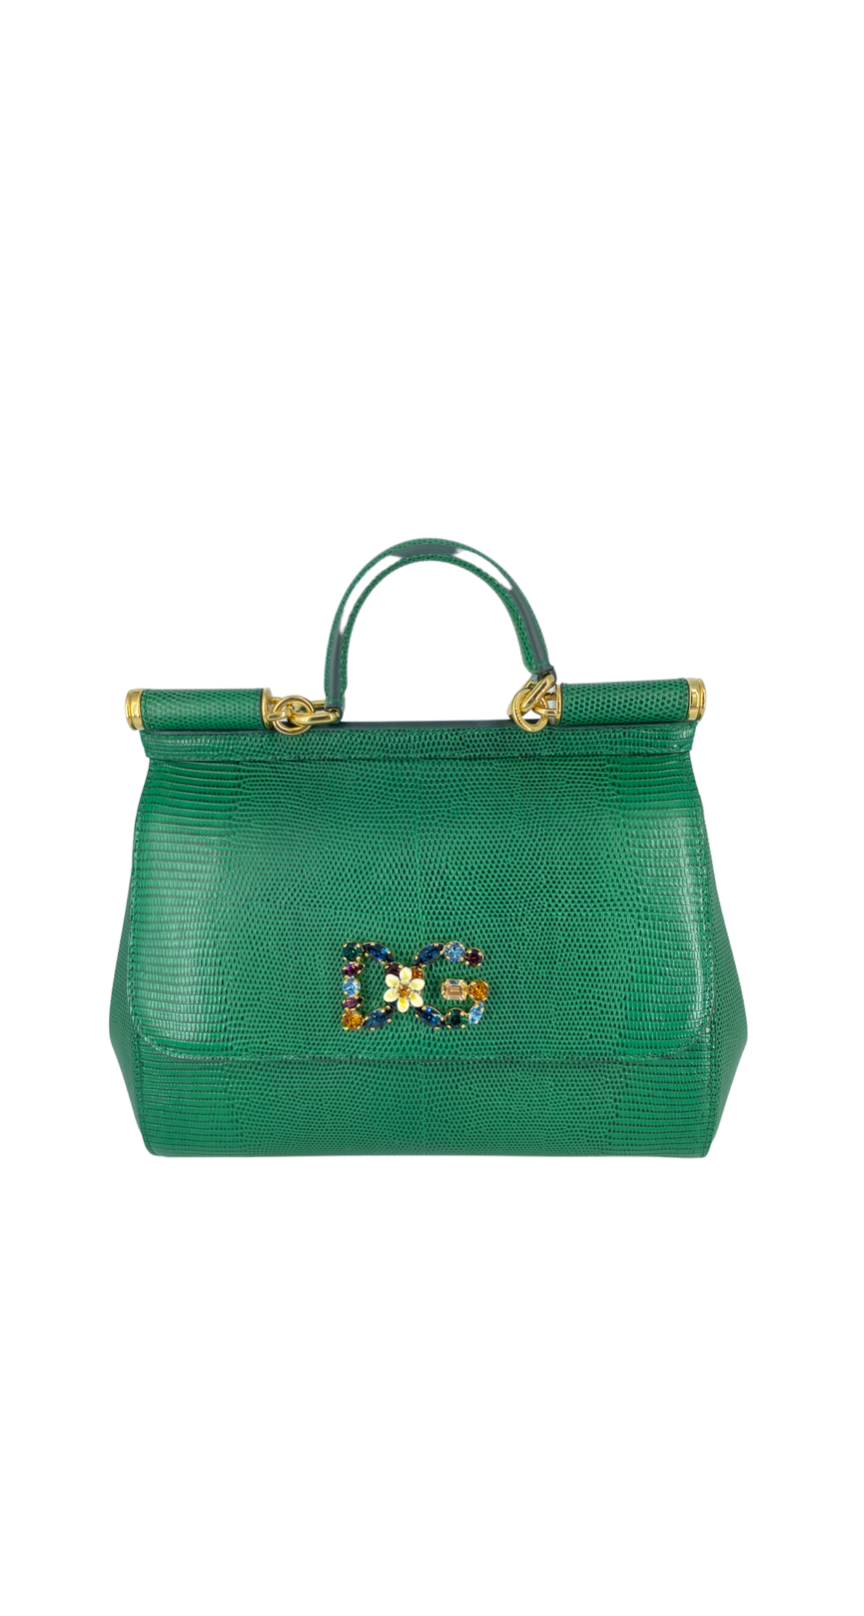 Dolce & Gabbana Small sicily bag for Women - US